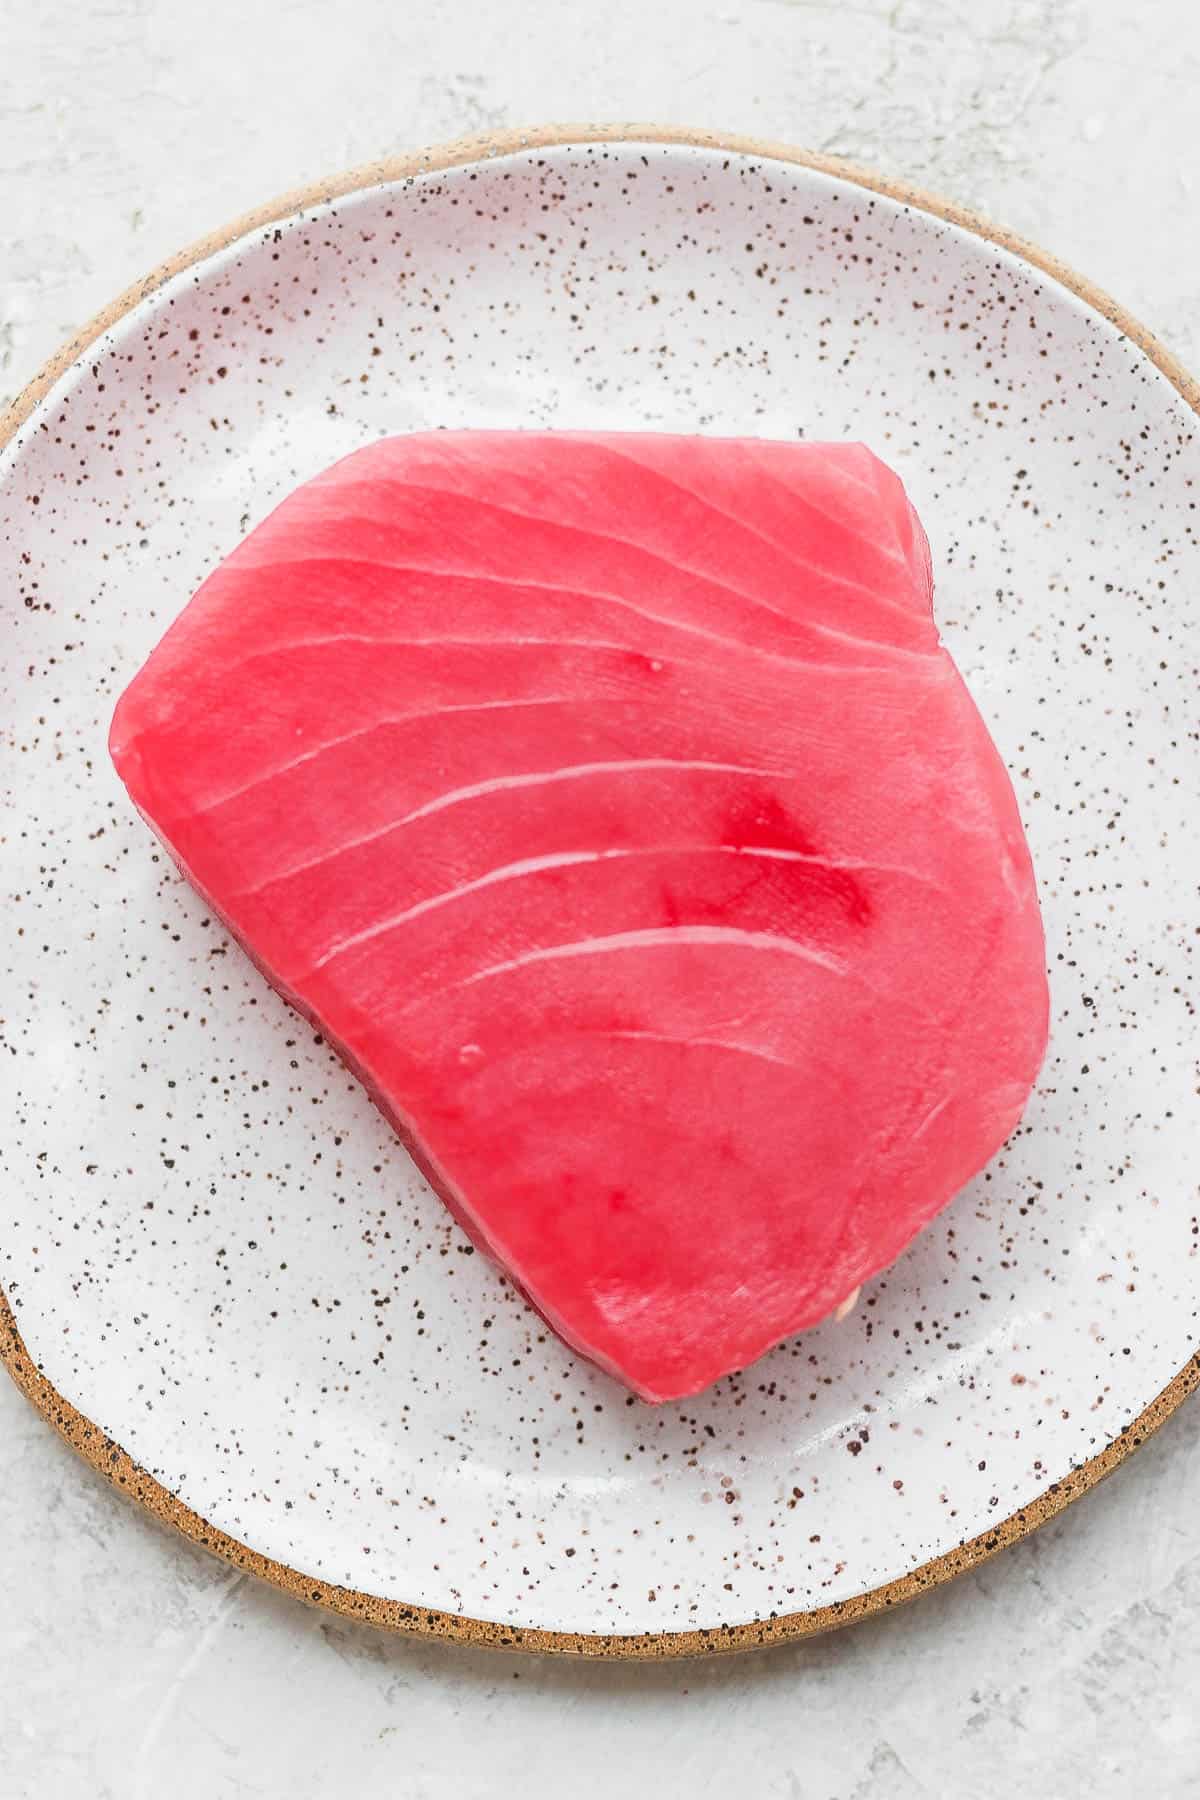 A raw tuna steak on a plate.